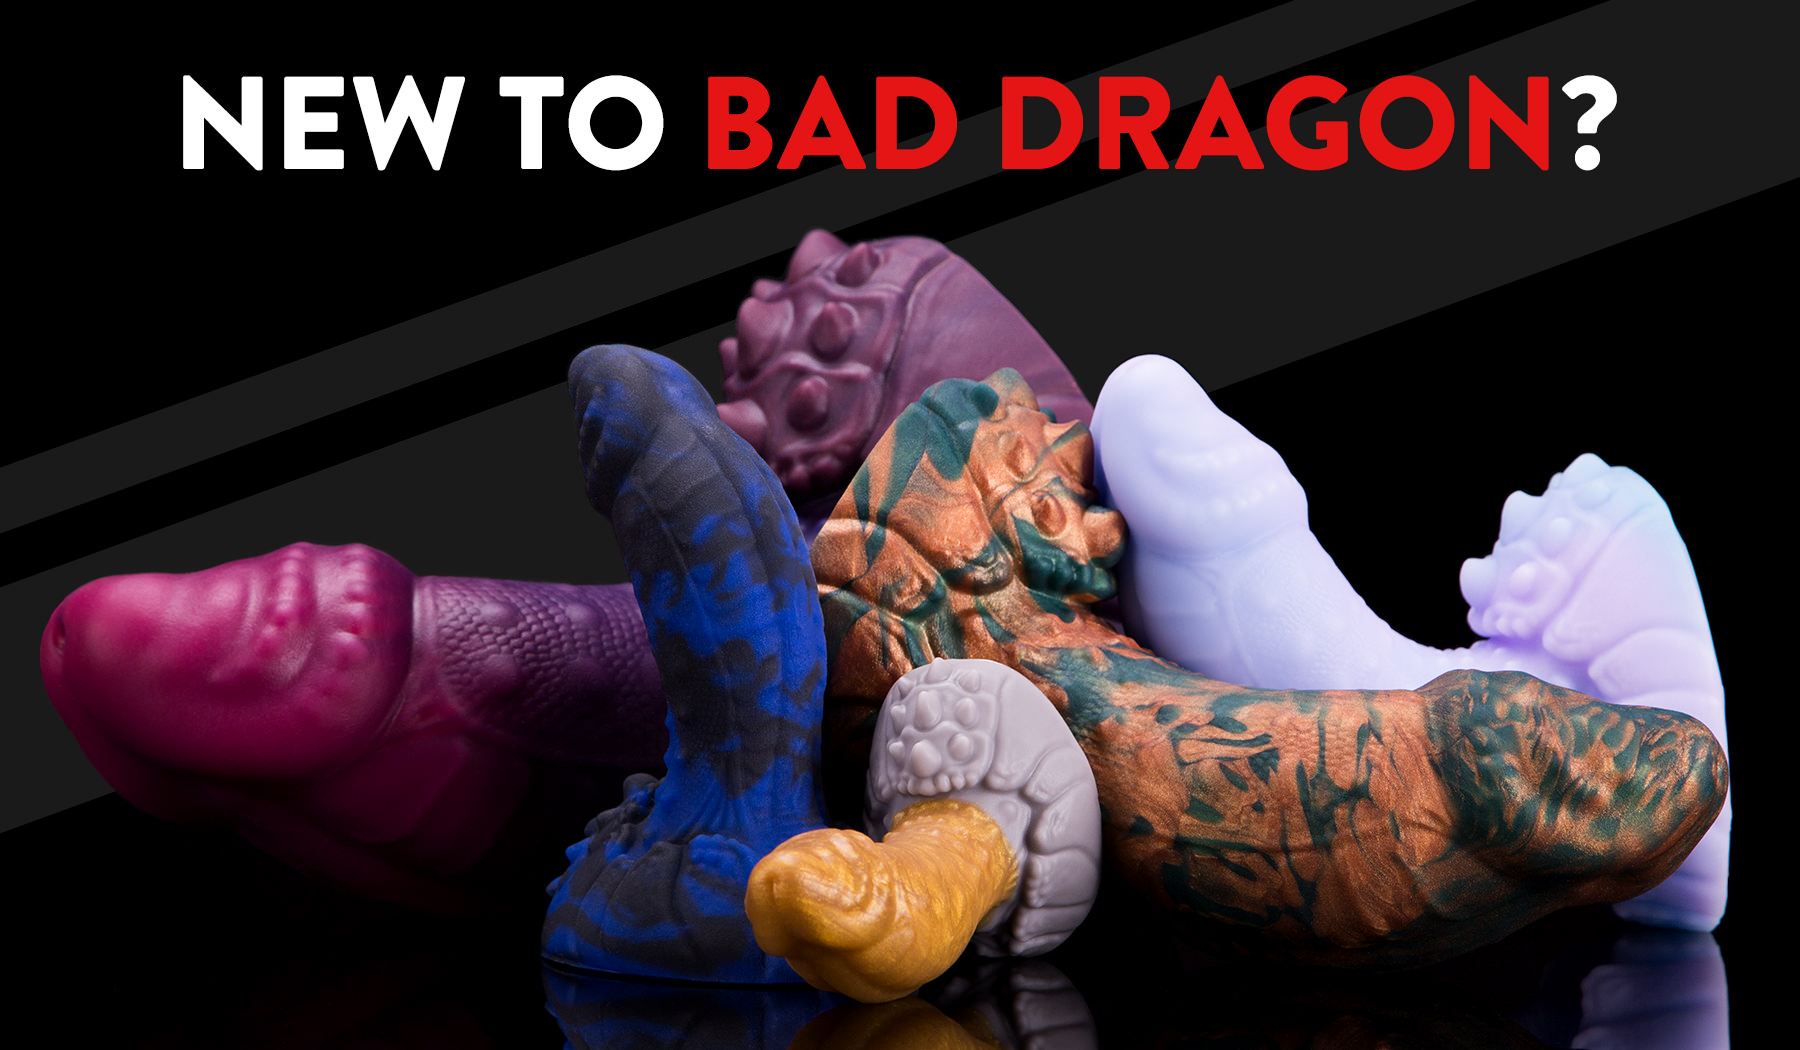 andrea pantano recommends using bad dragon dildo pic